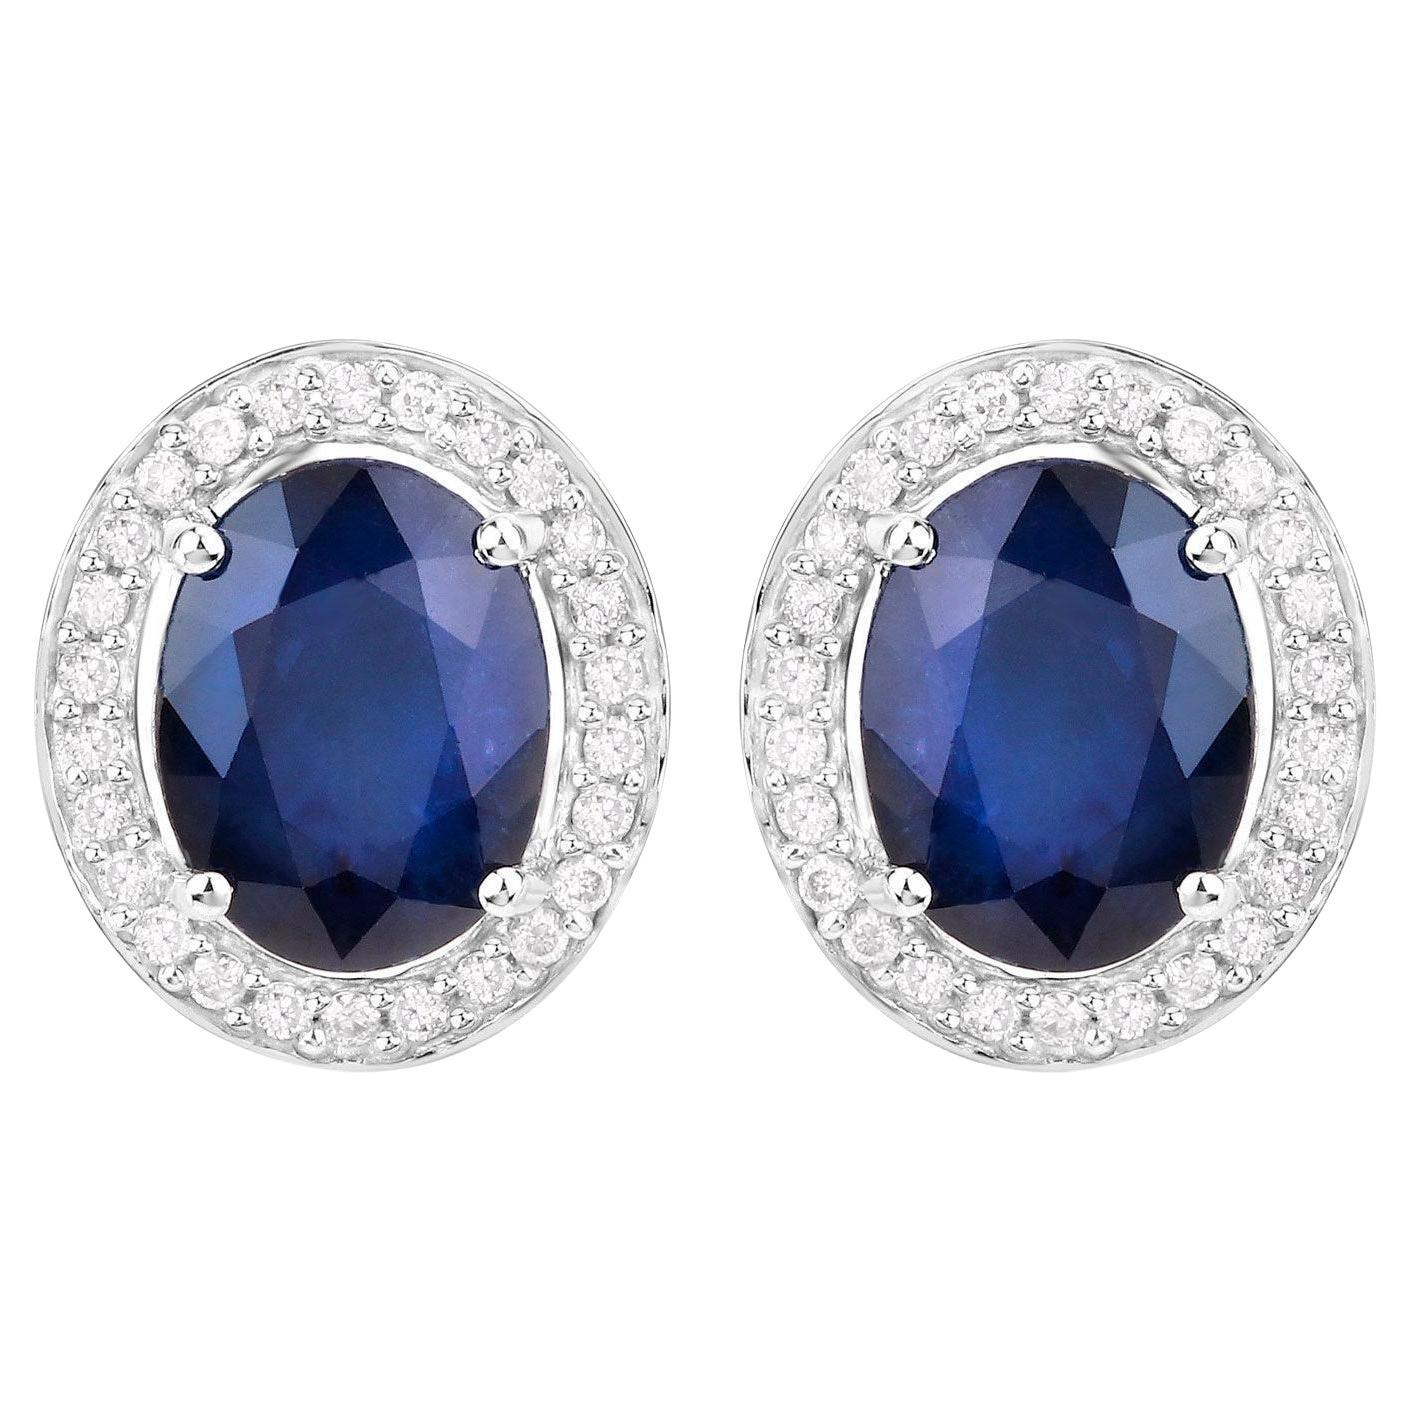 Blue Sapphire Stud Earrings Diamond Halo 4.16 Carats 14K White Gold